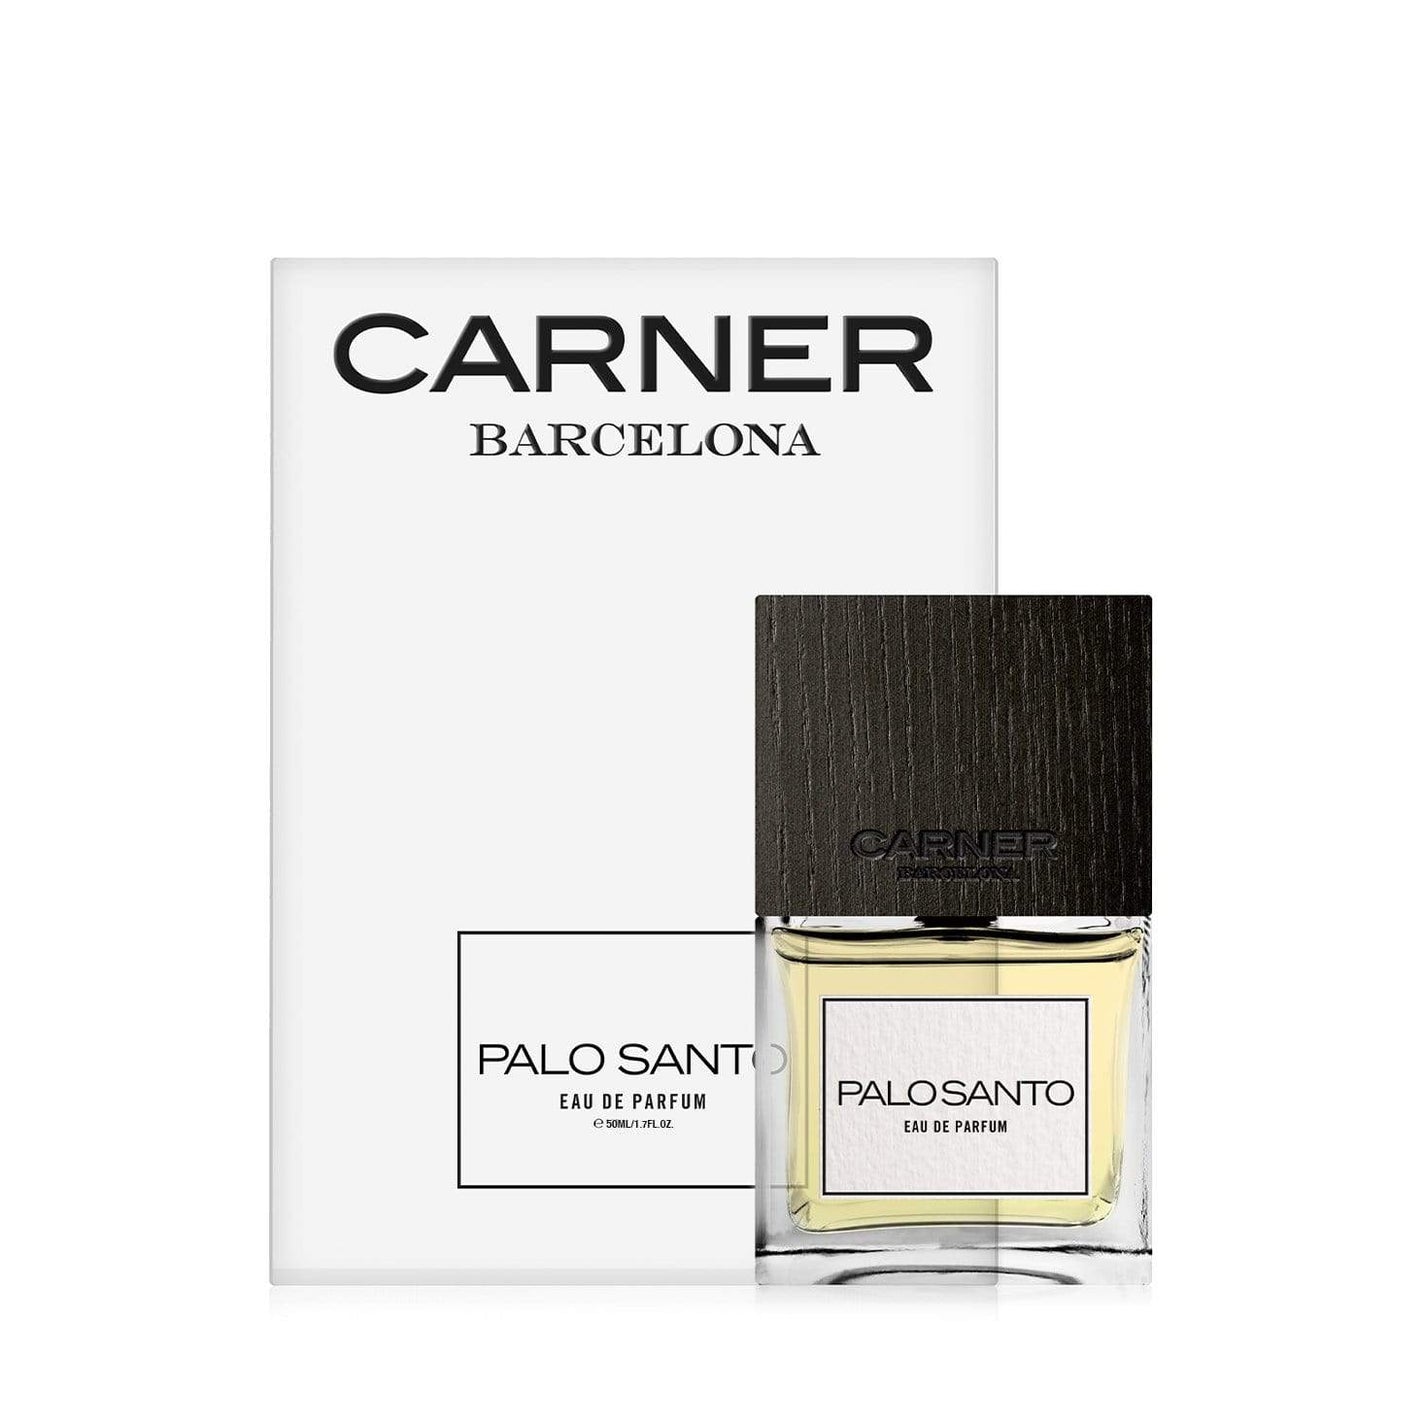 CARNER BARCELONA Palo Santo Eau de Parfum - 50ml